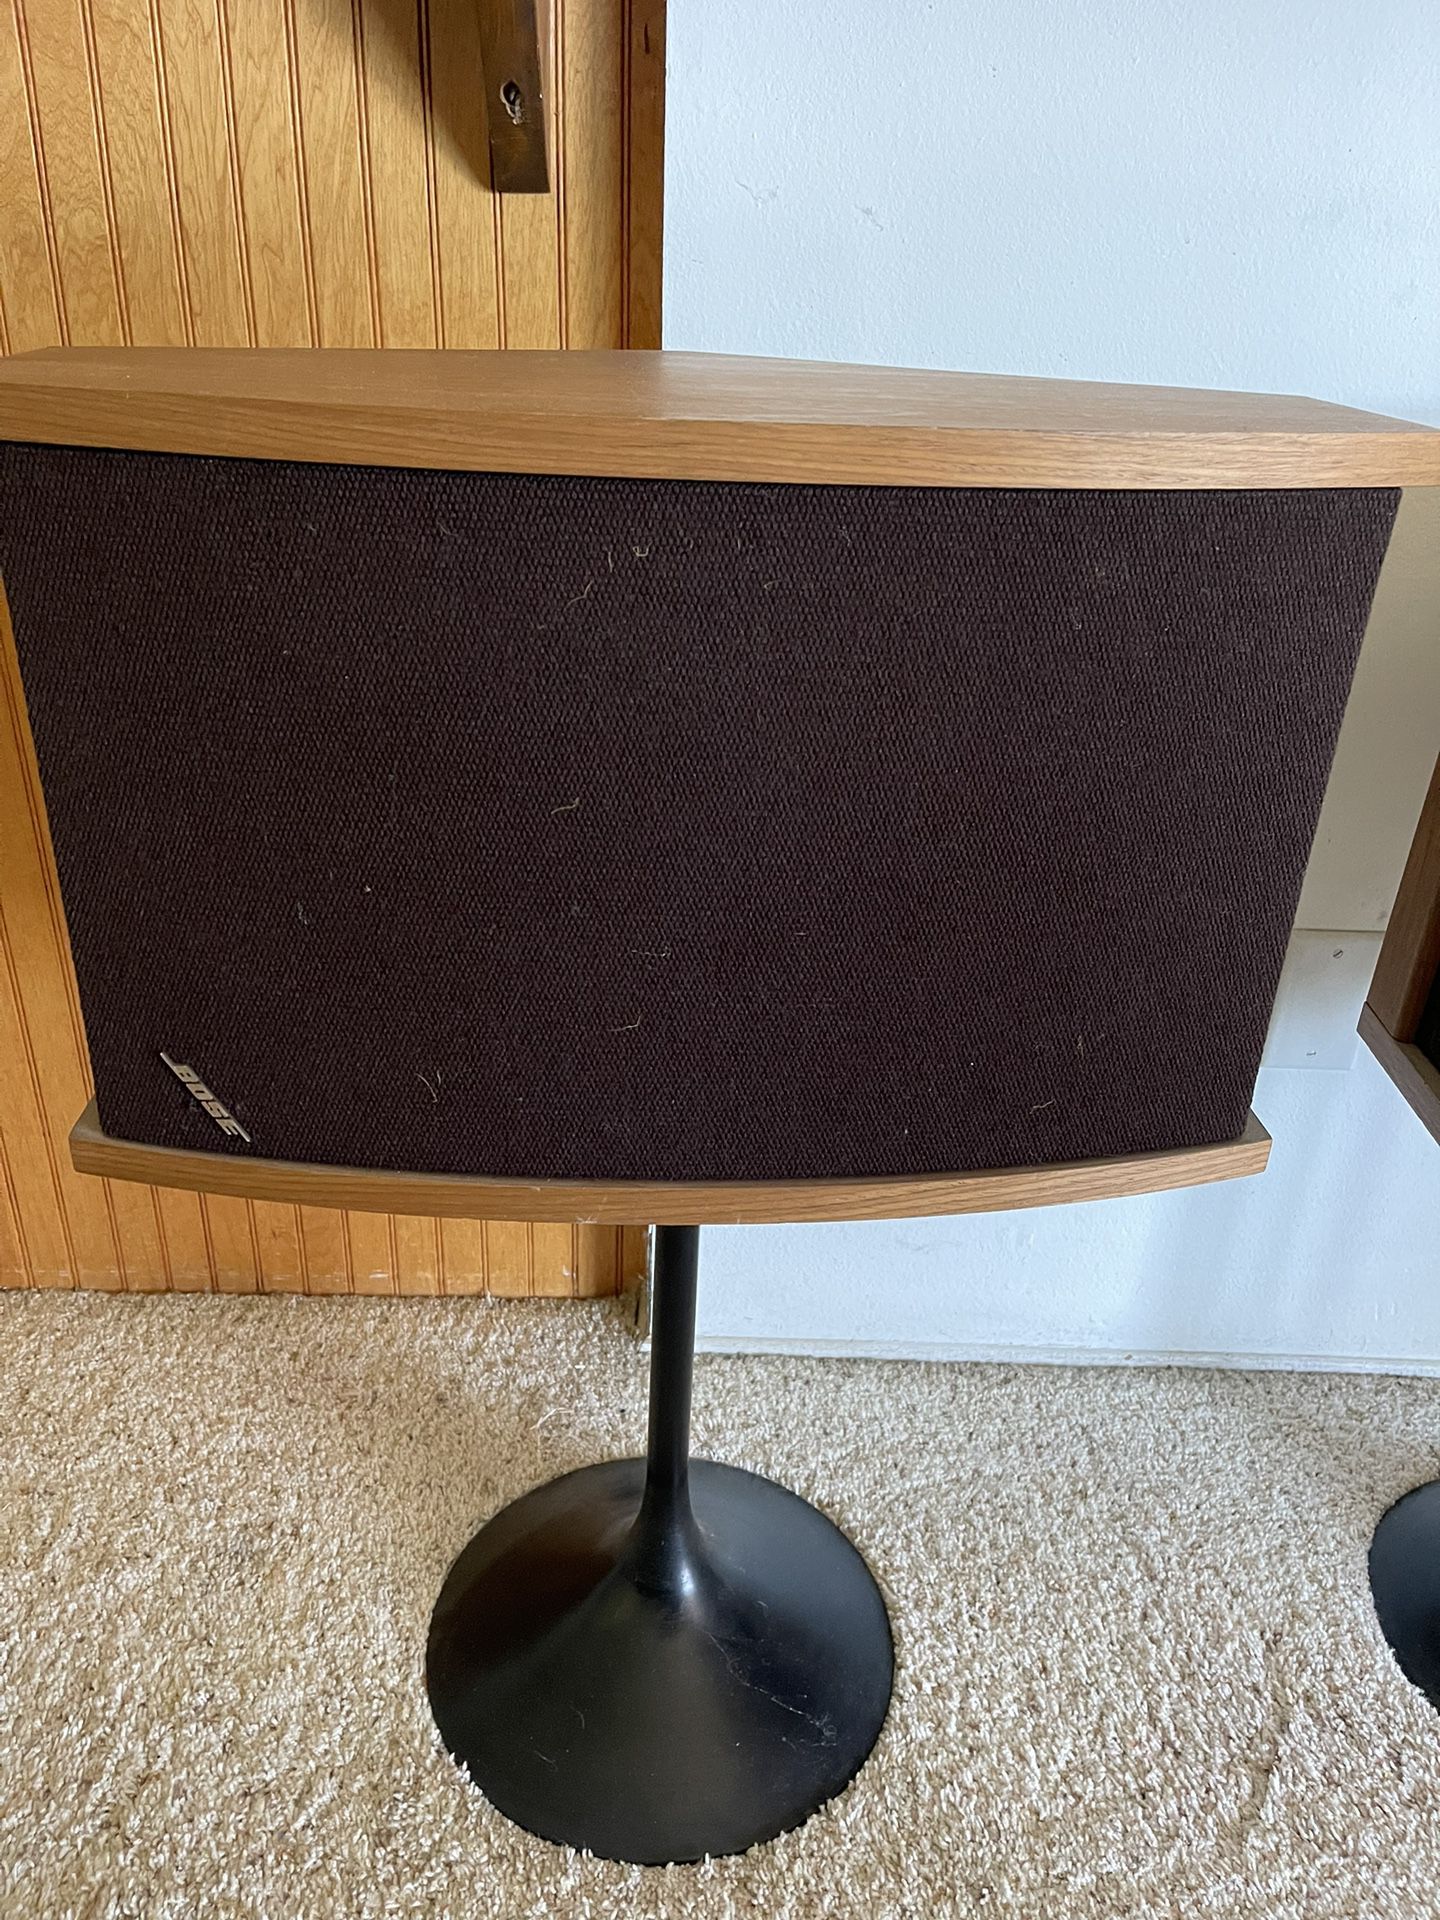 Vintage Bose 901 Speakers Series 6 - No Equalizer